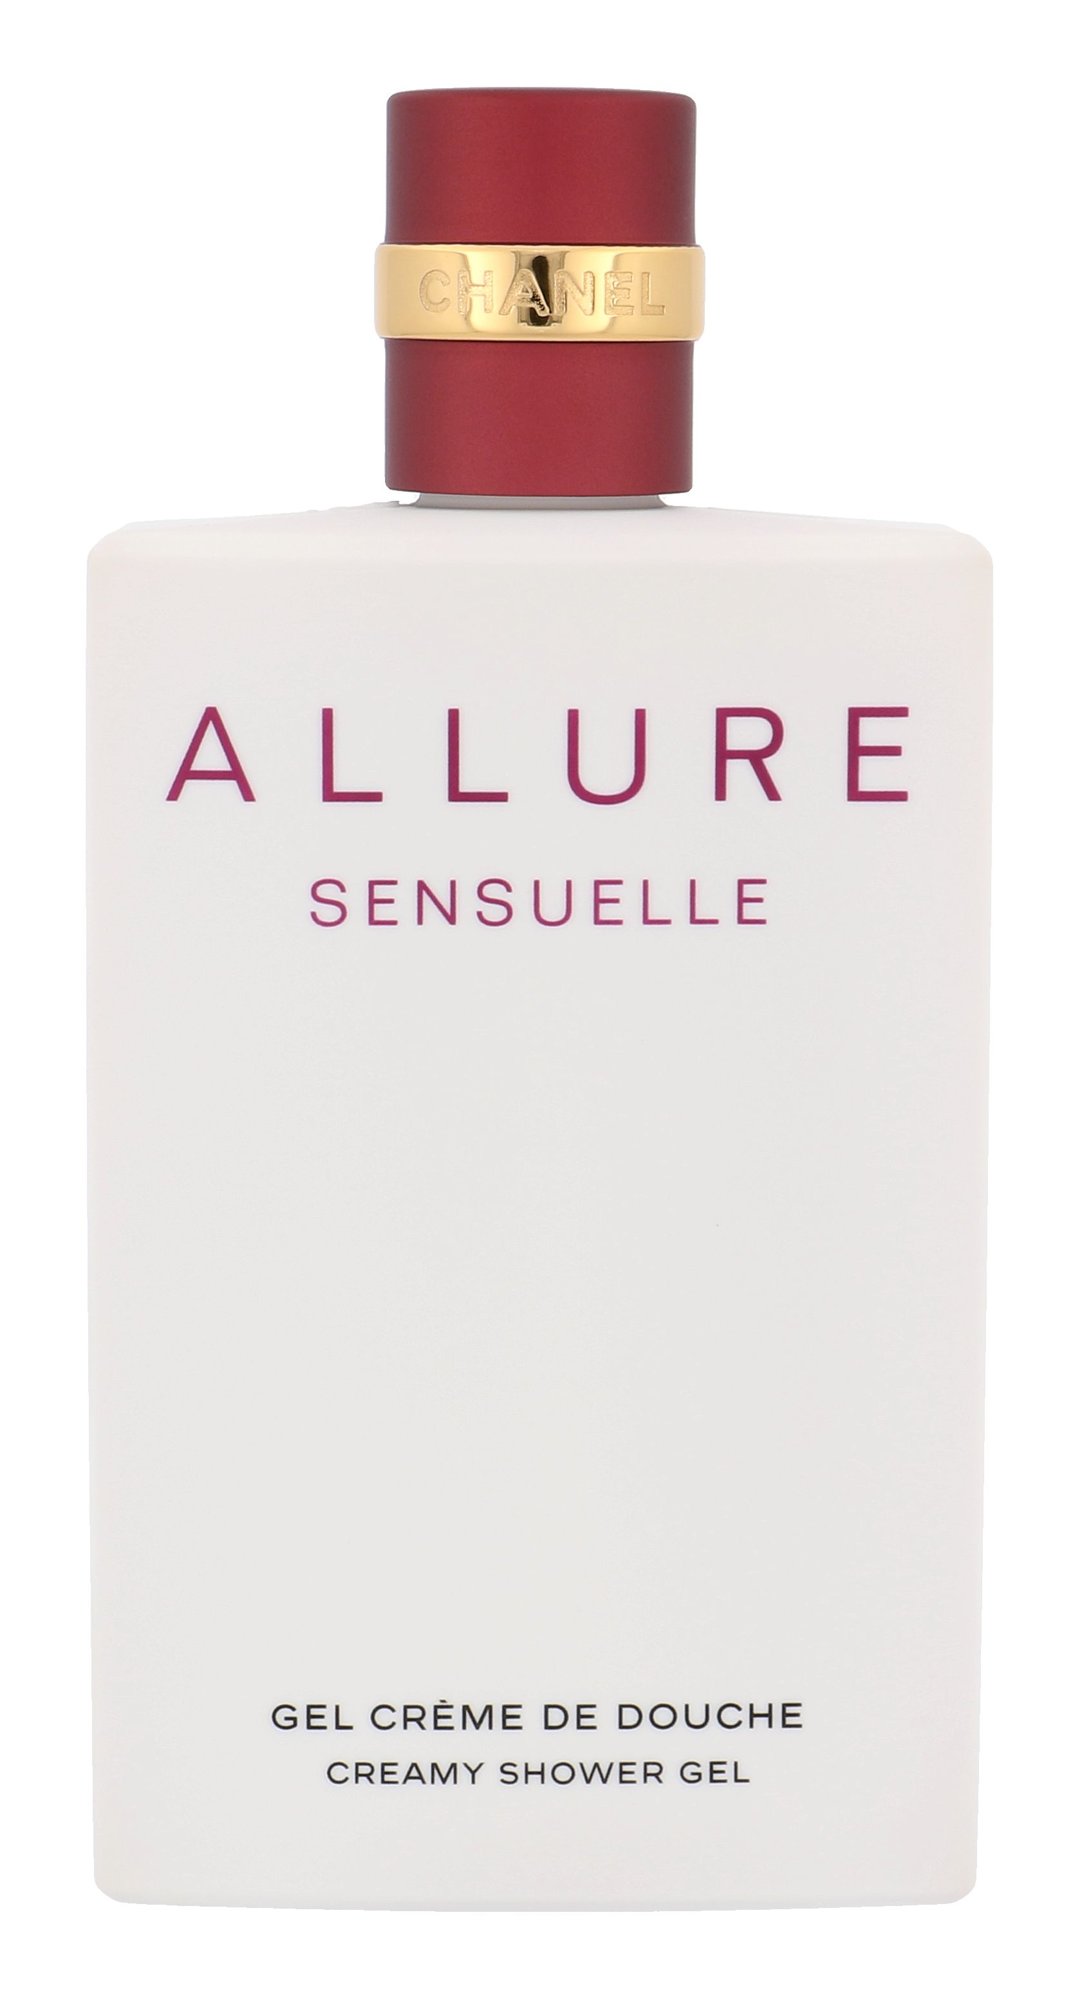 Chanel Allure Sensuelle 200ml dušo želė